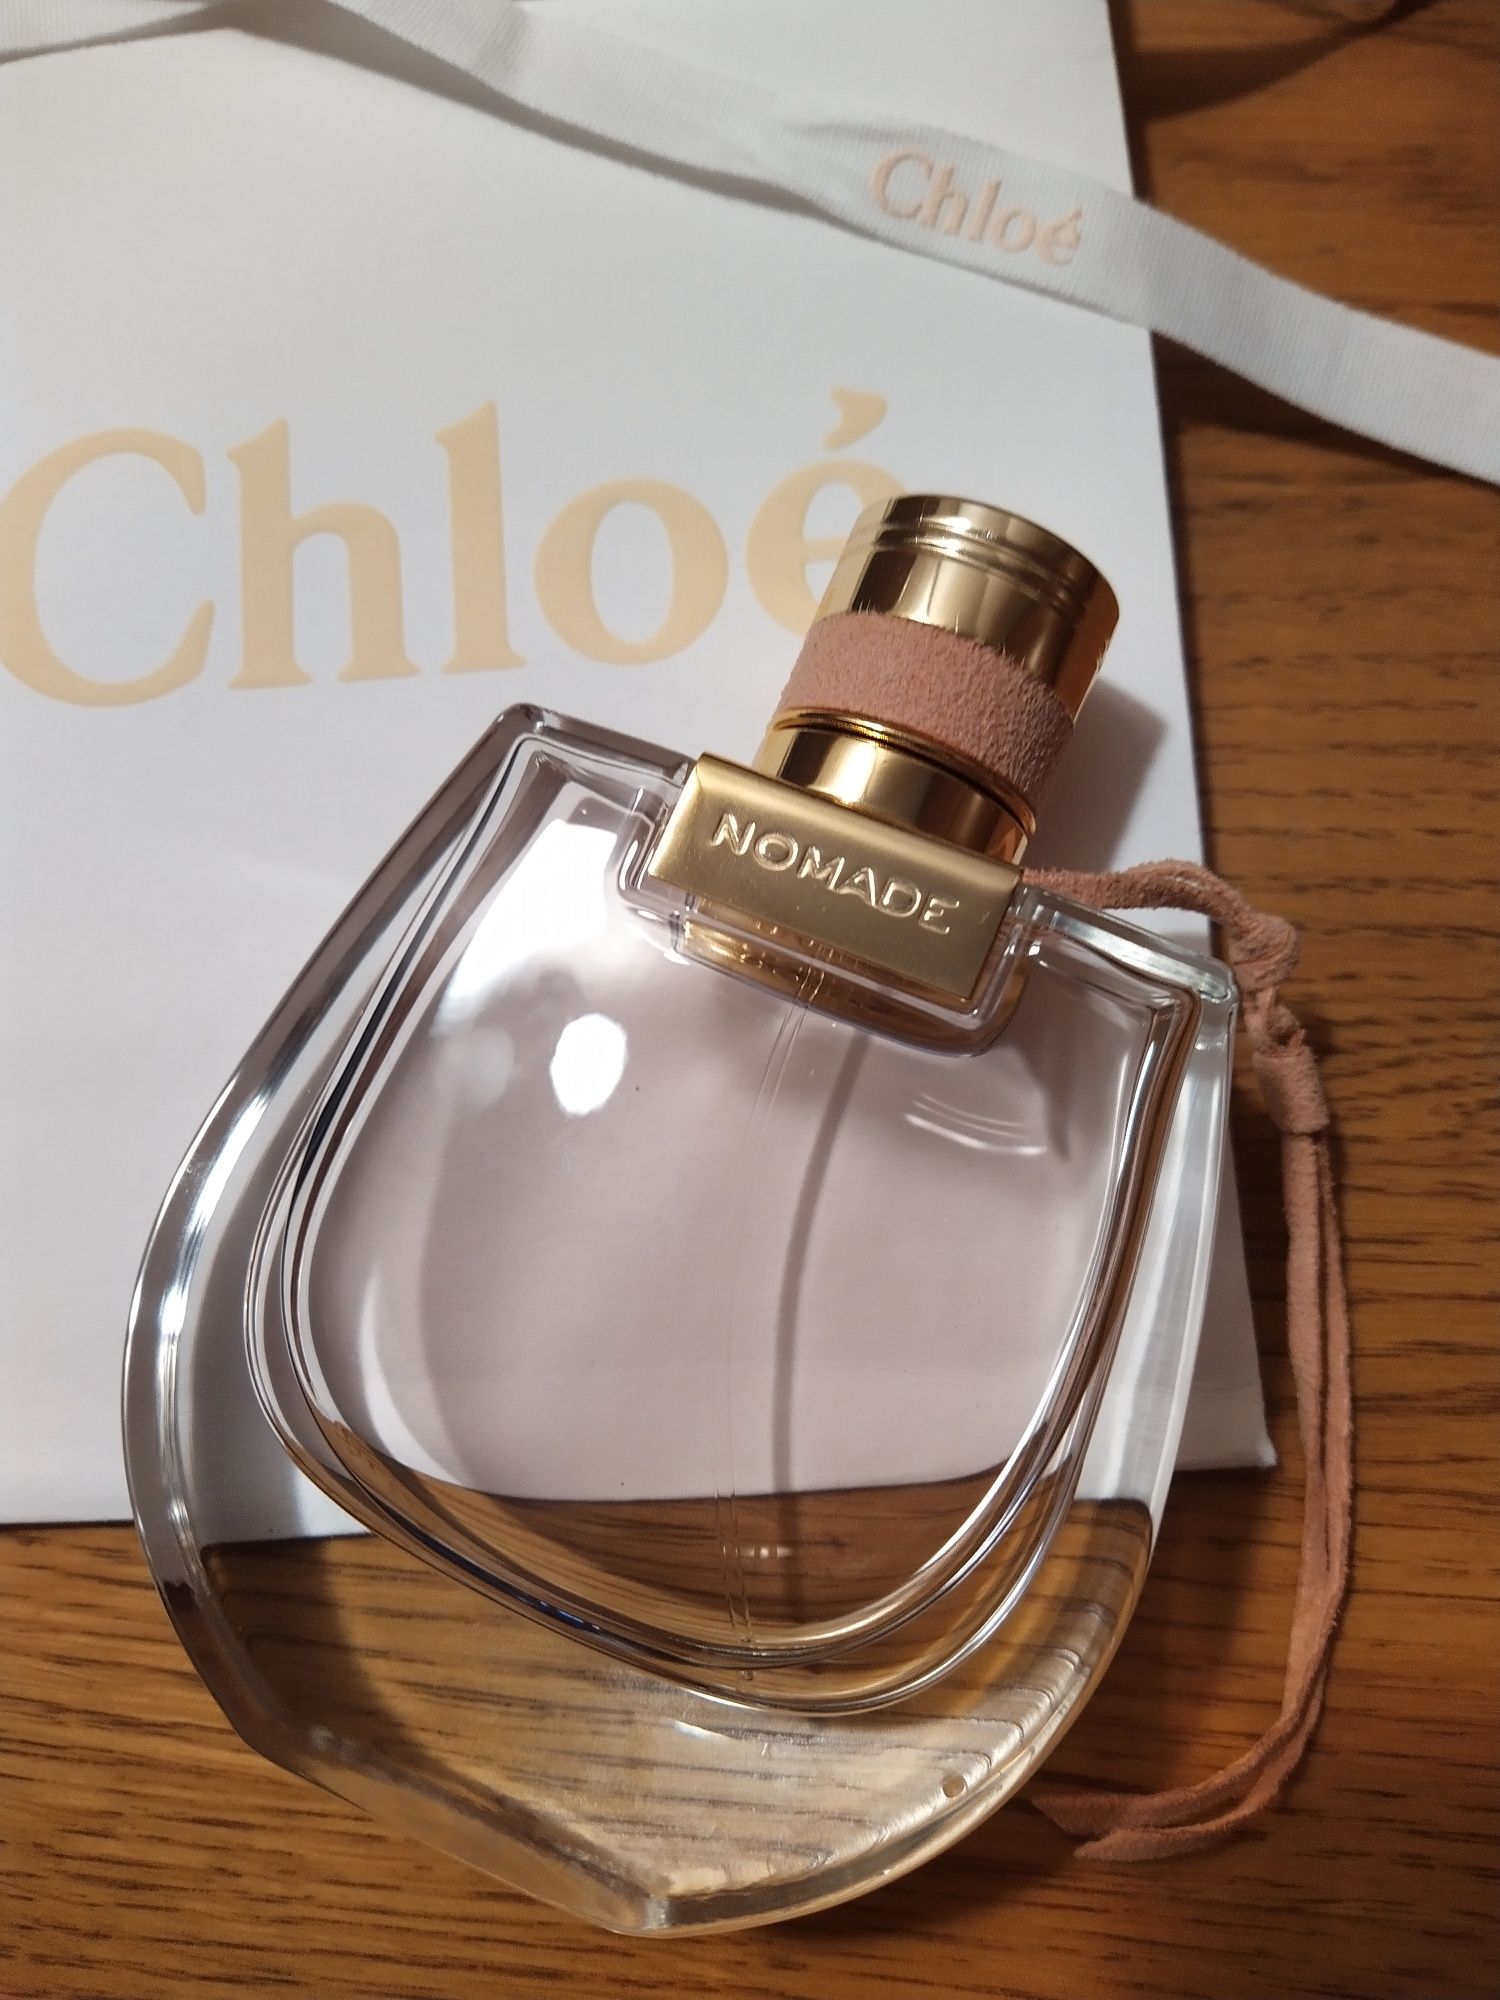 Chloe NOMADE парфюм. Оригинал 75ml